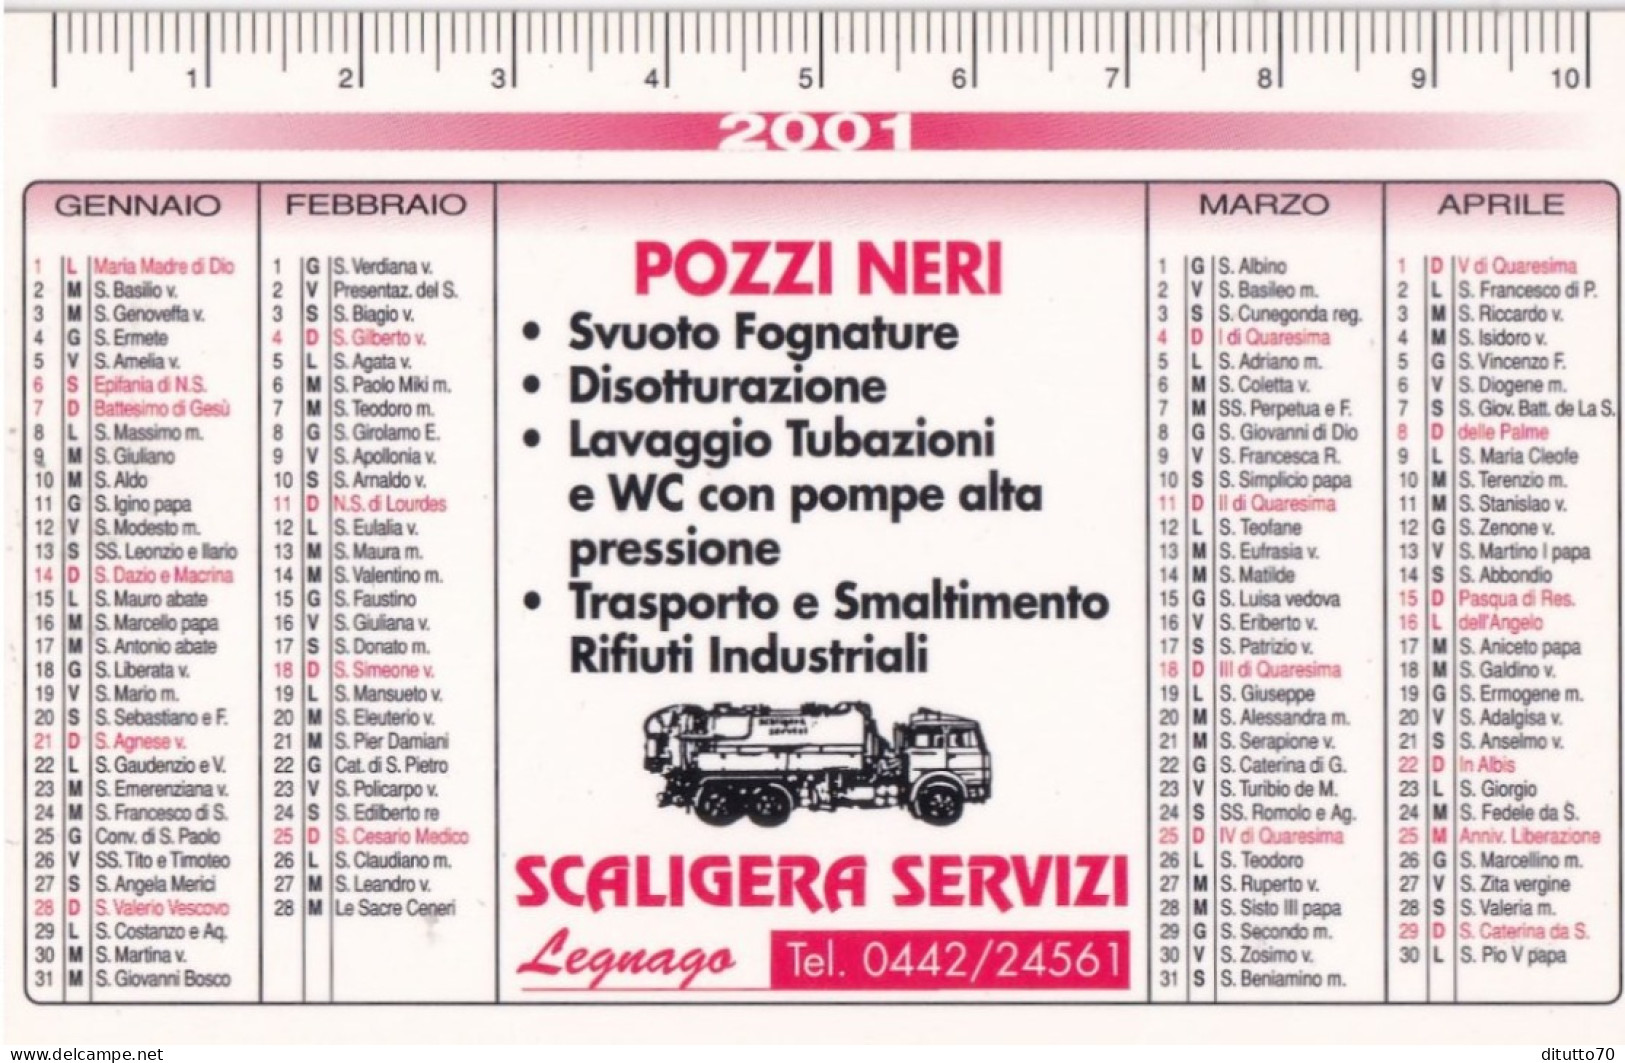 Calendarietto - Pozzi Neri - Scaligera Servizi - Legnago - Anno 2001 - Kleinformat : 2001-...